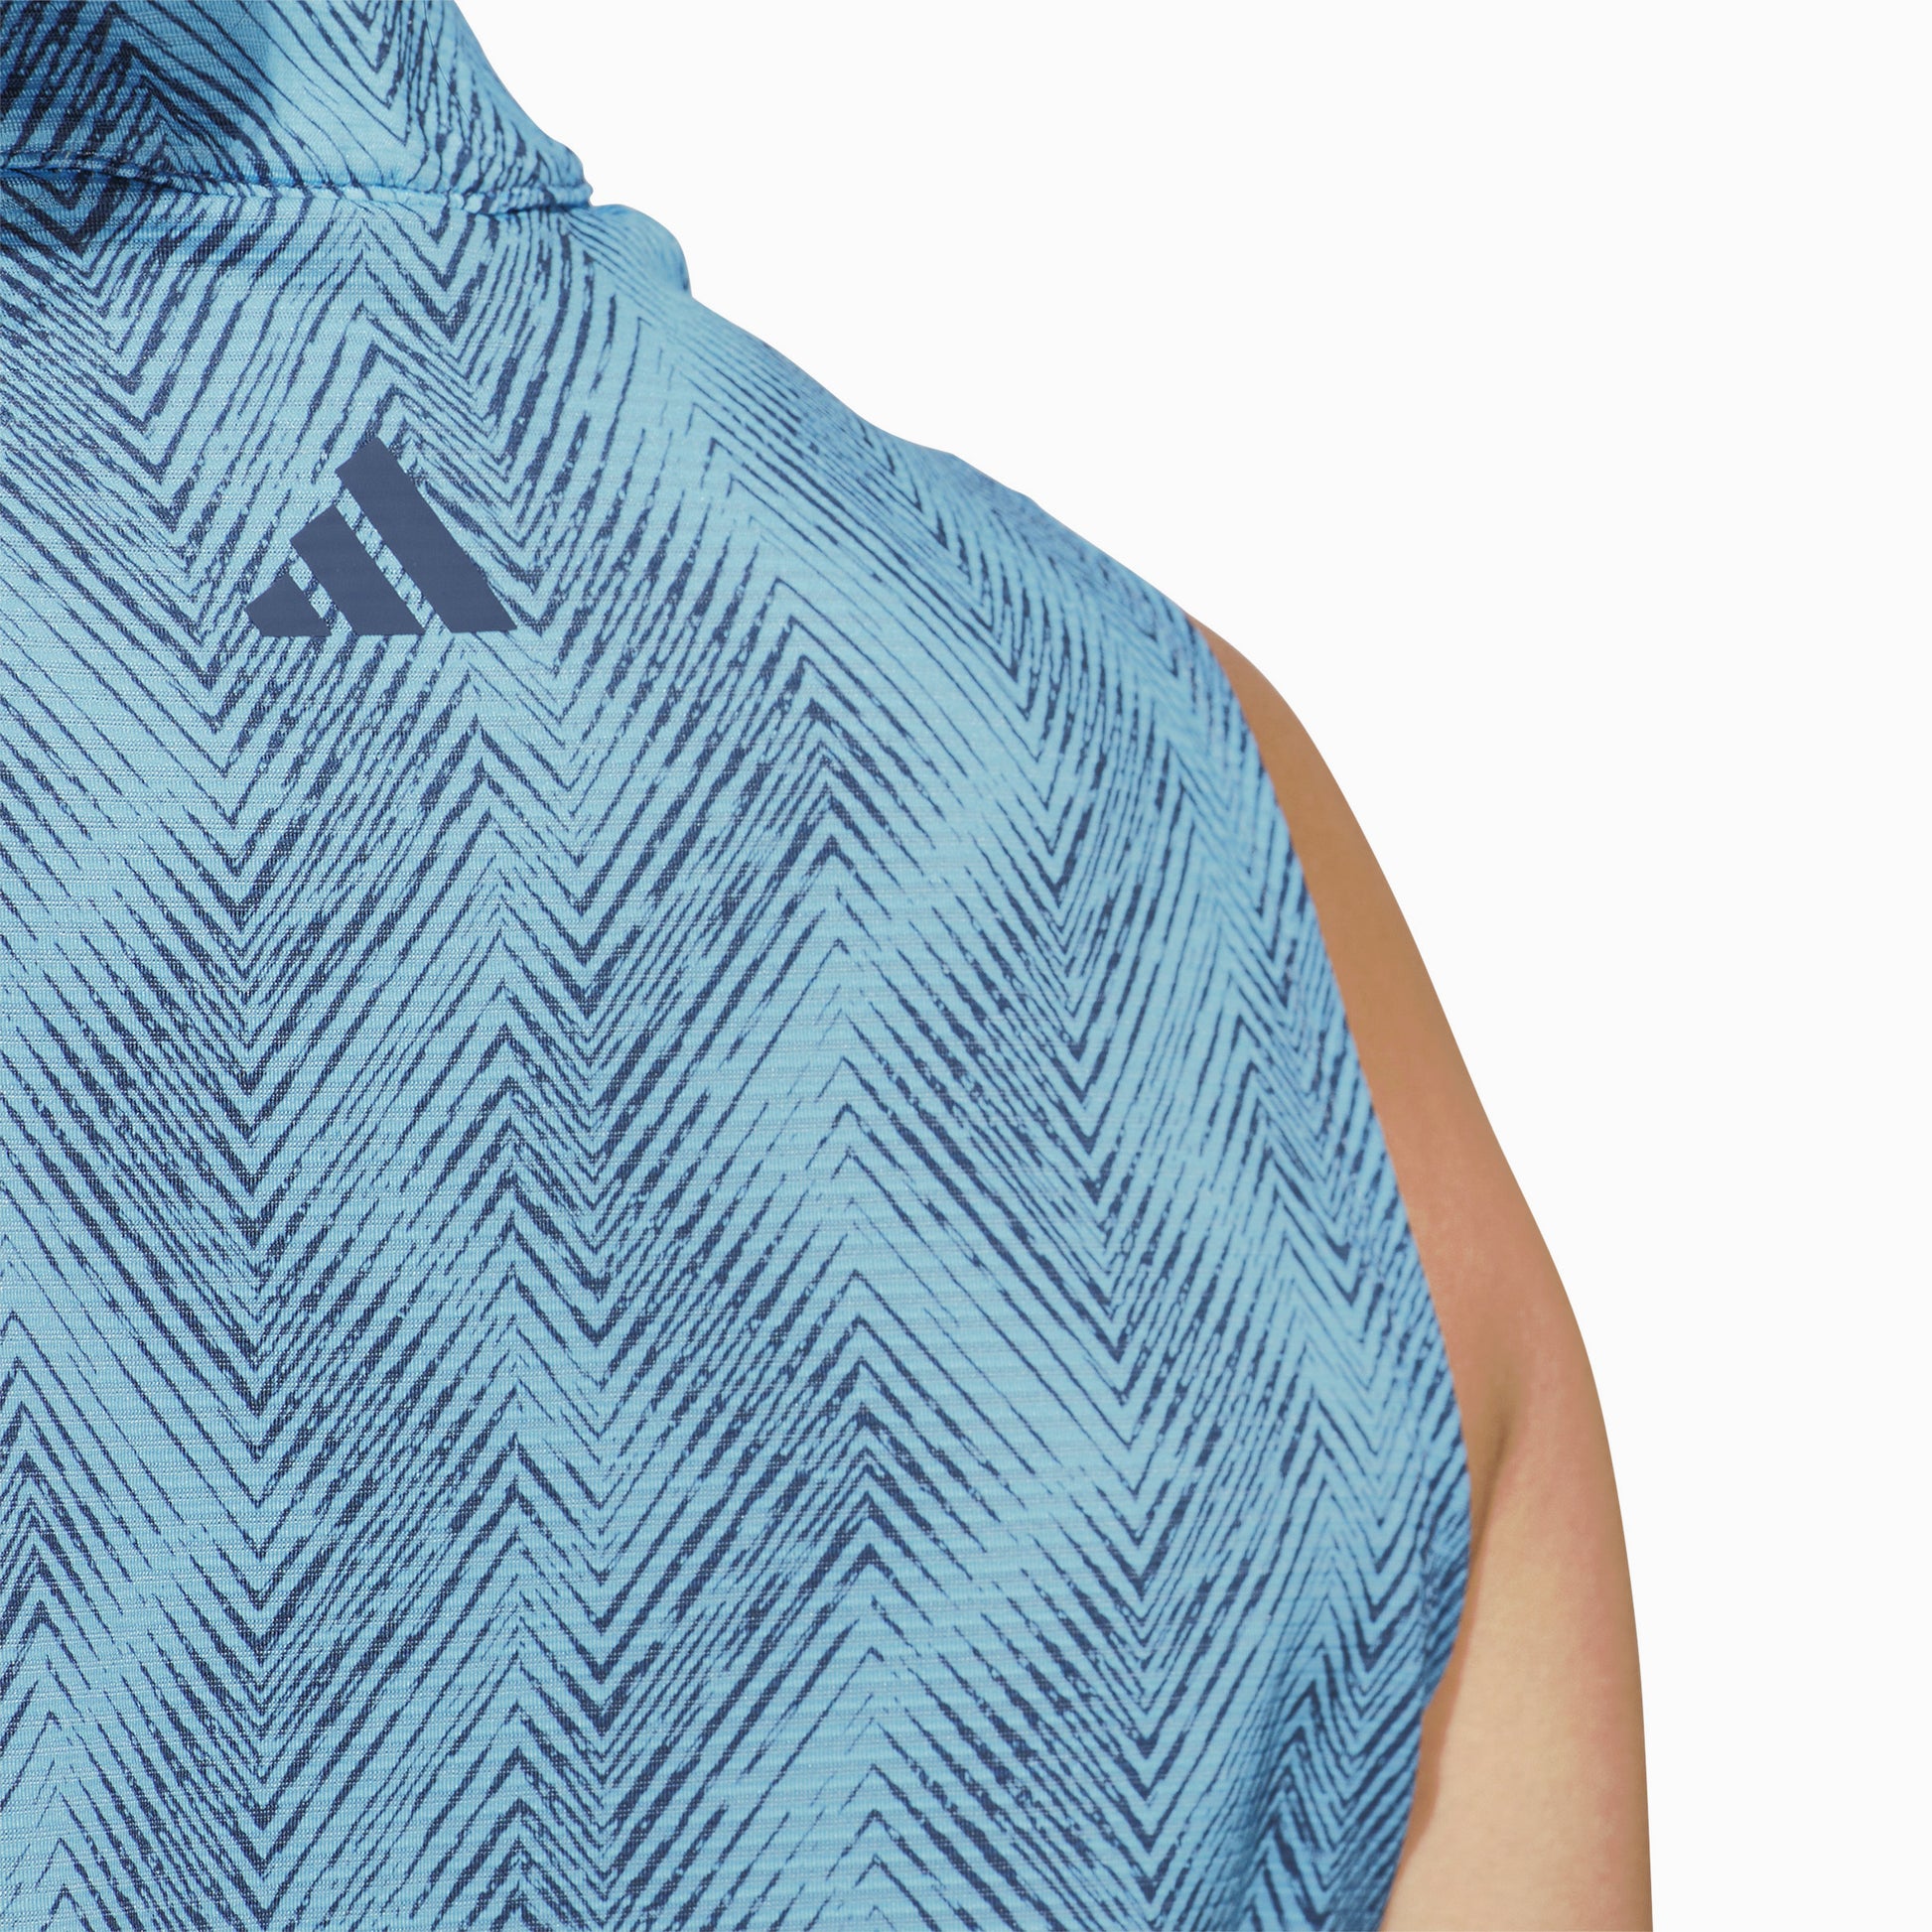 adidas Ladies Sleeveless Golf Polo with Abstract Zig-Zag Print in Semi Blue Burst